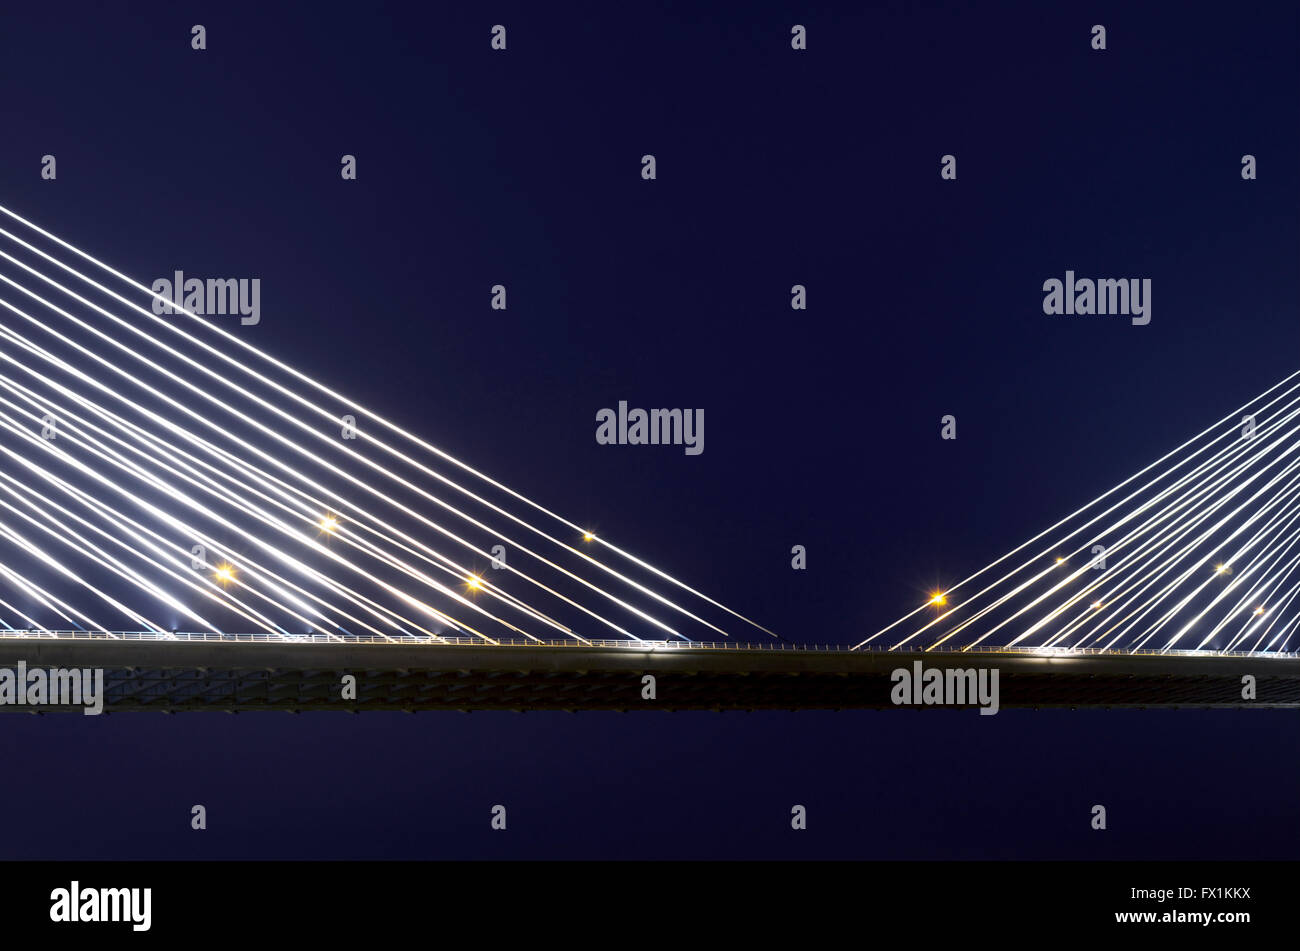 Suspension cables on the Vasco da Gama bridge, illuminated at night. Portugal Stock Photo